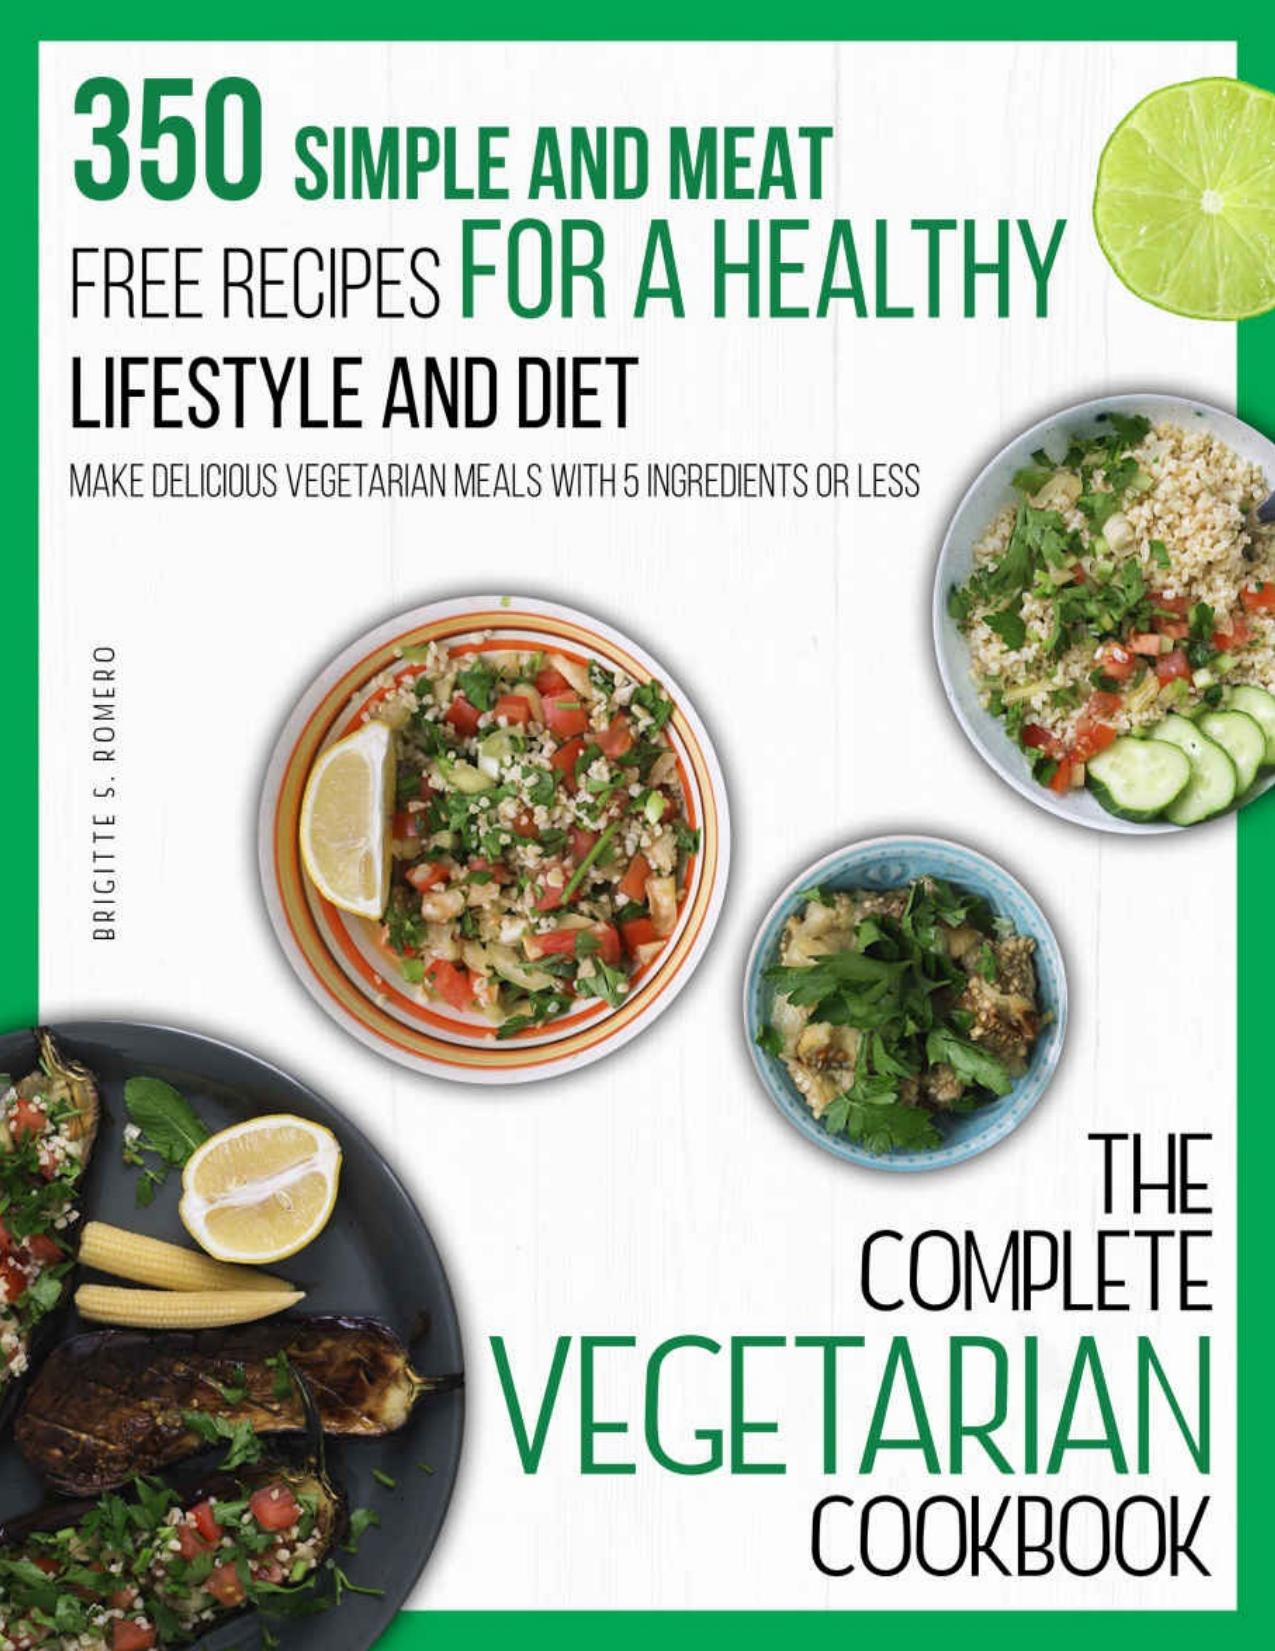 The Complete Vegetarian cookbook by Brigitte S. Romero